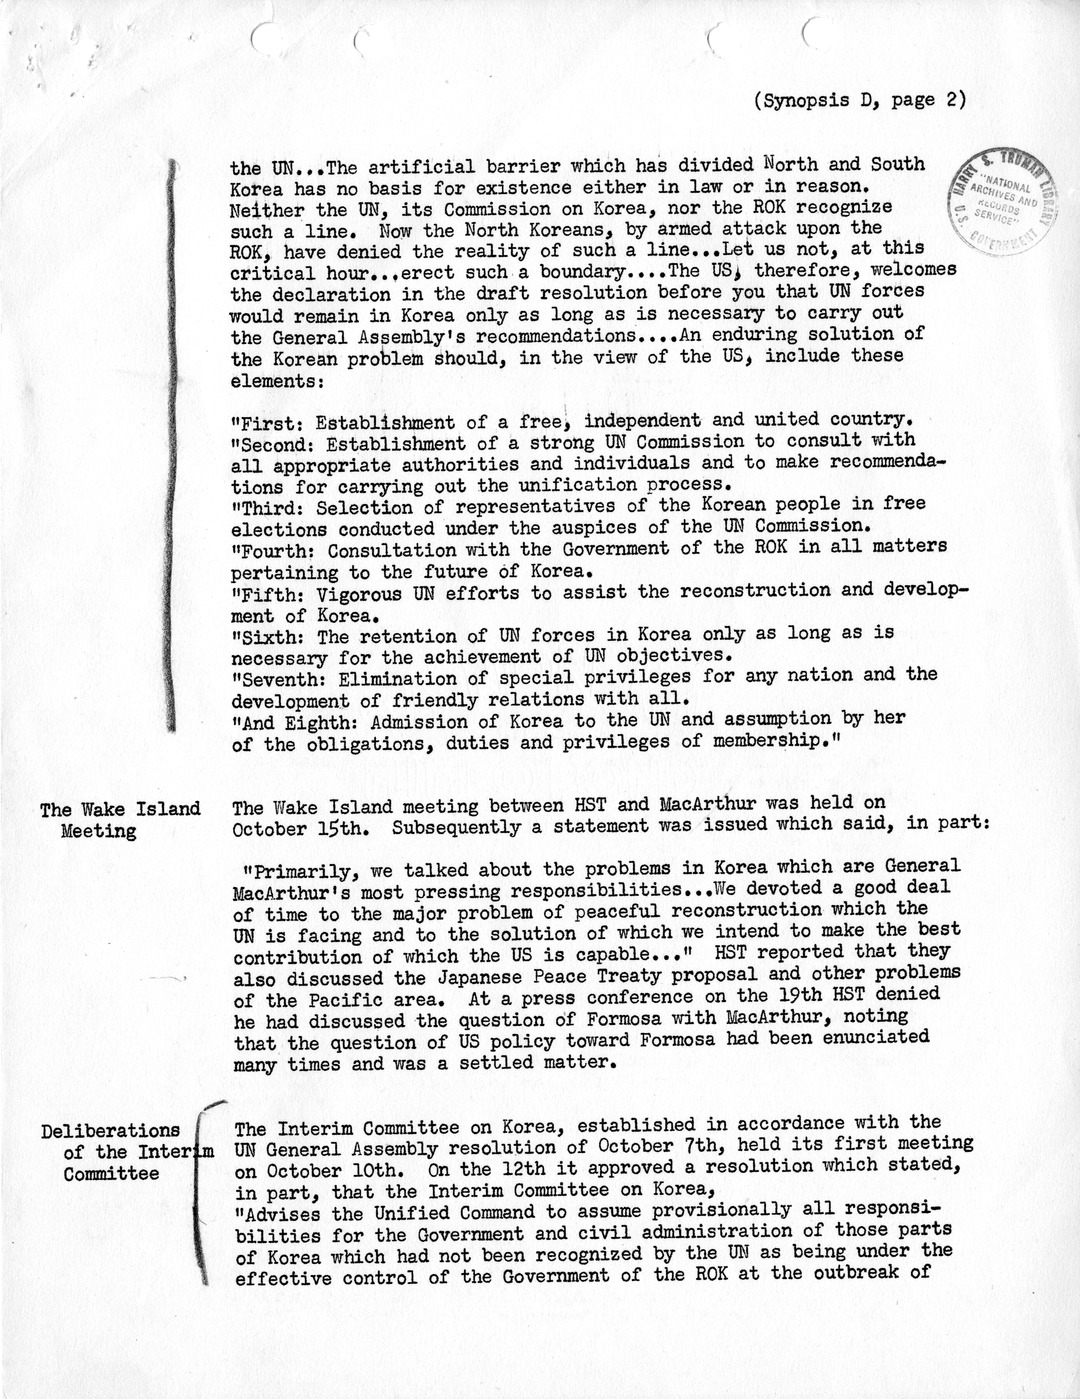 Synopsis D, Korea - Diplomatic-Political Developments, September-December 1950